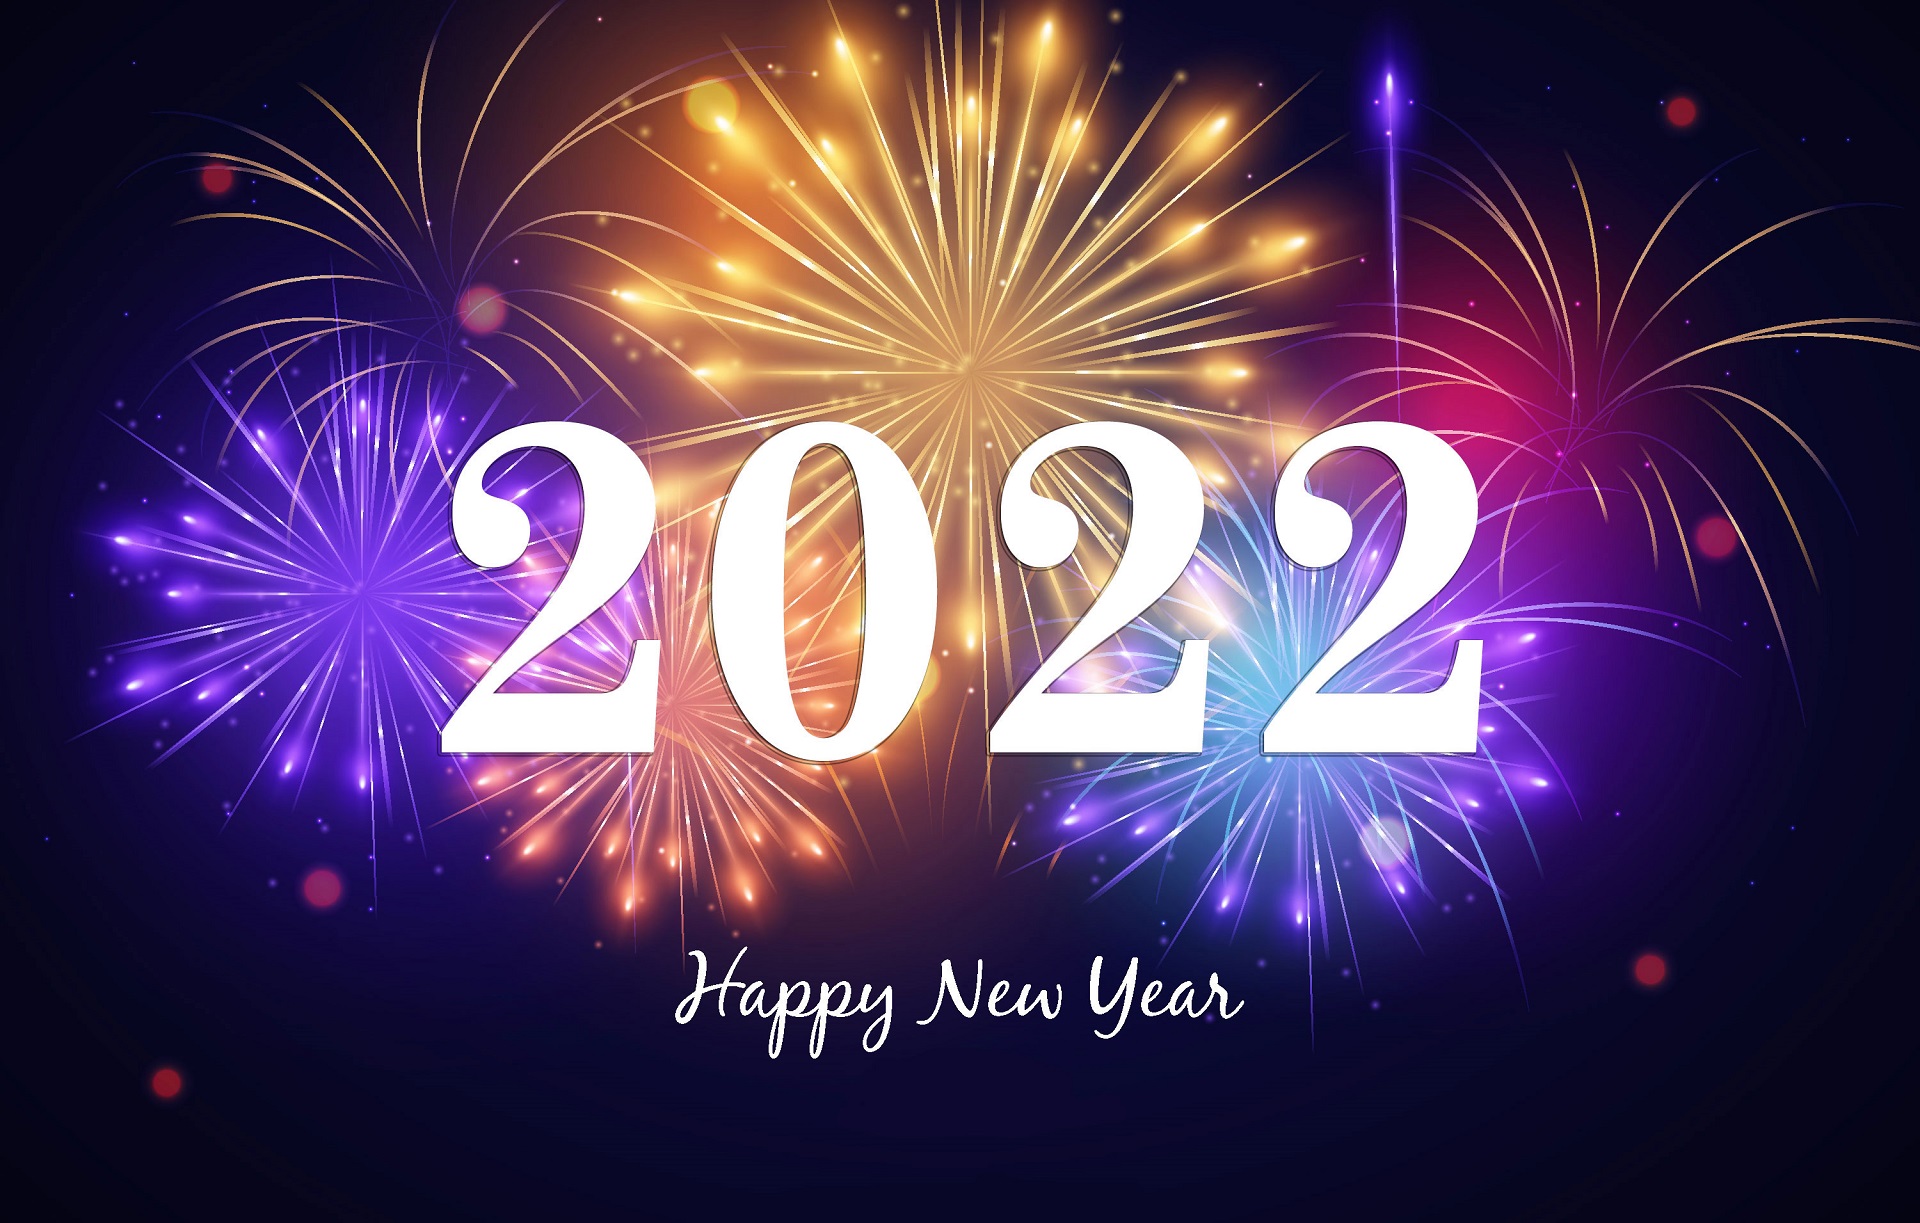 hinh nen new year hd 2022